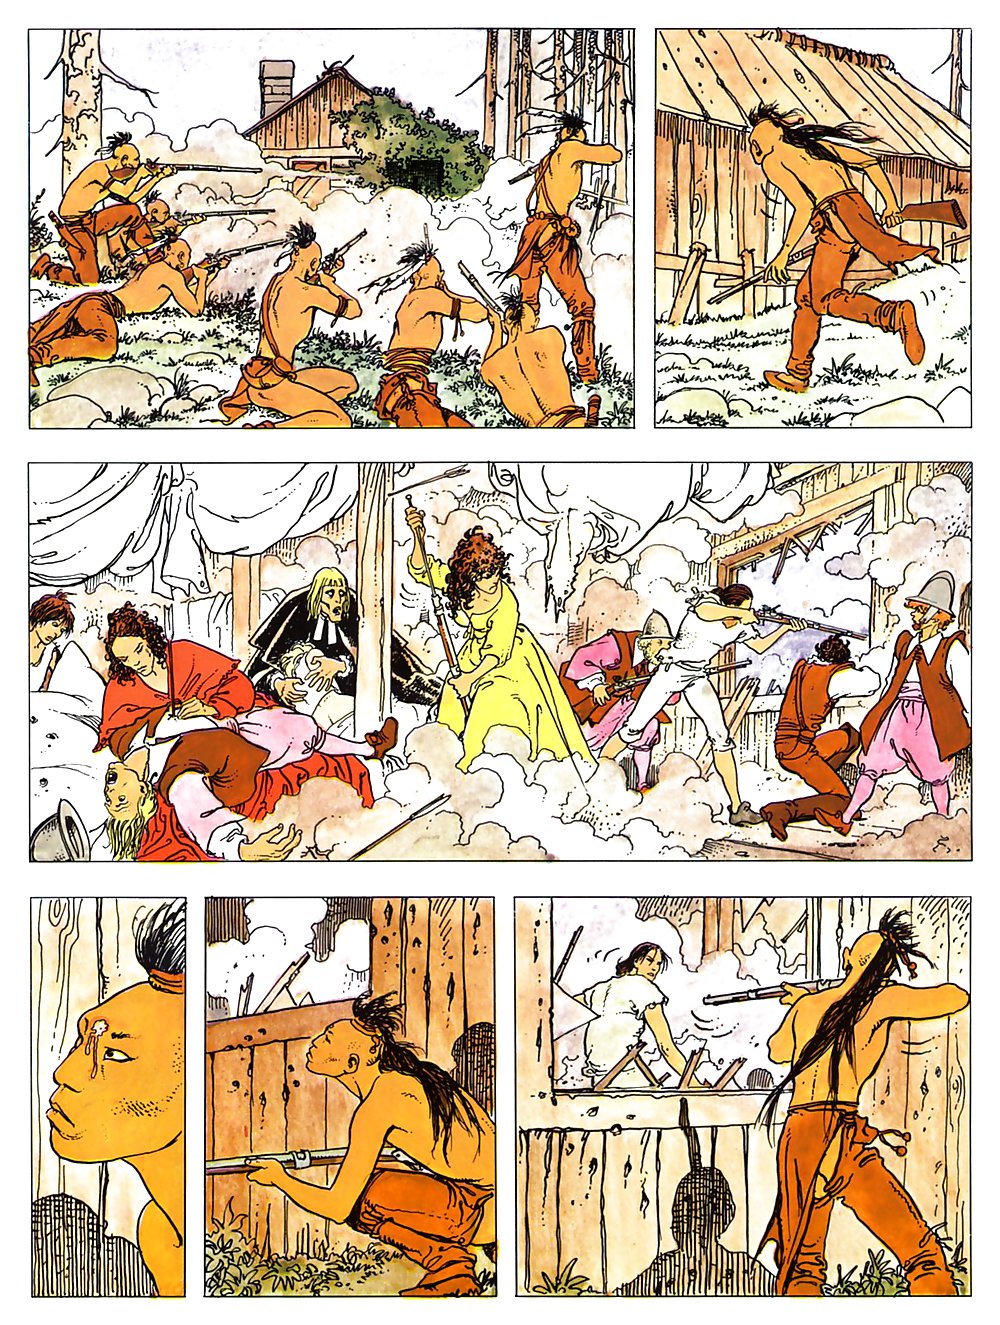 Erotic Comic Art 27 - Indian Summer #18895833